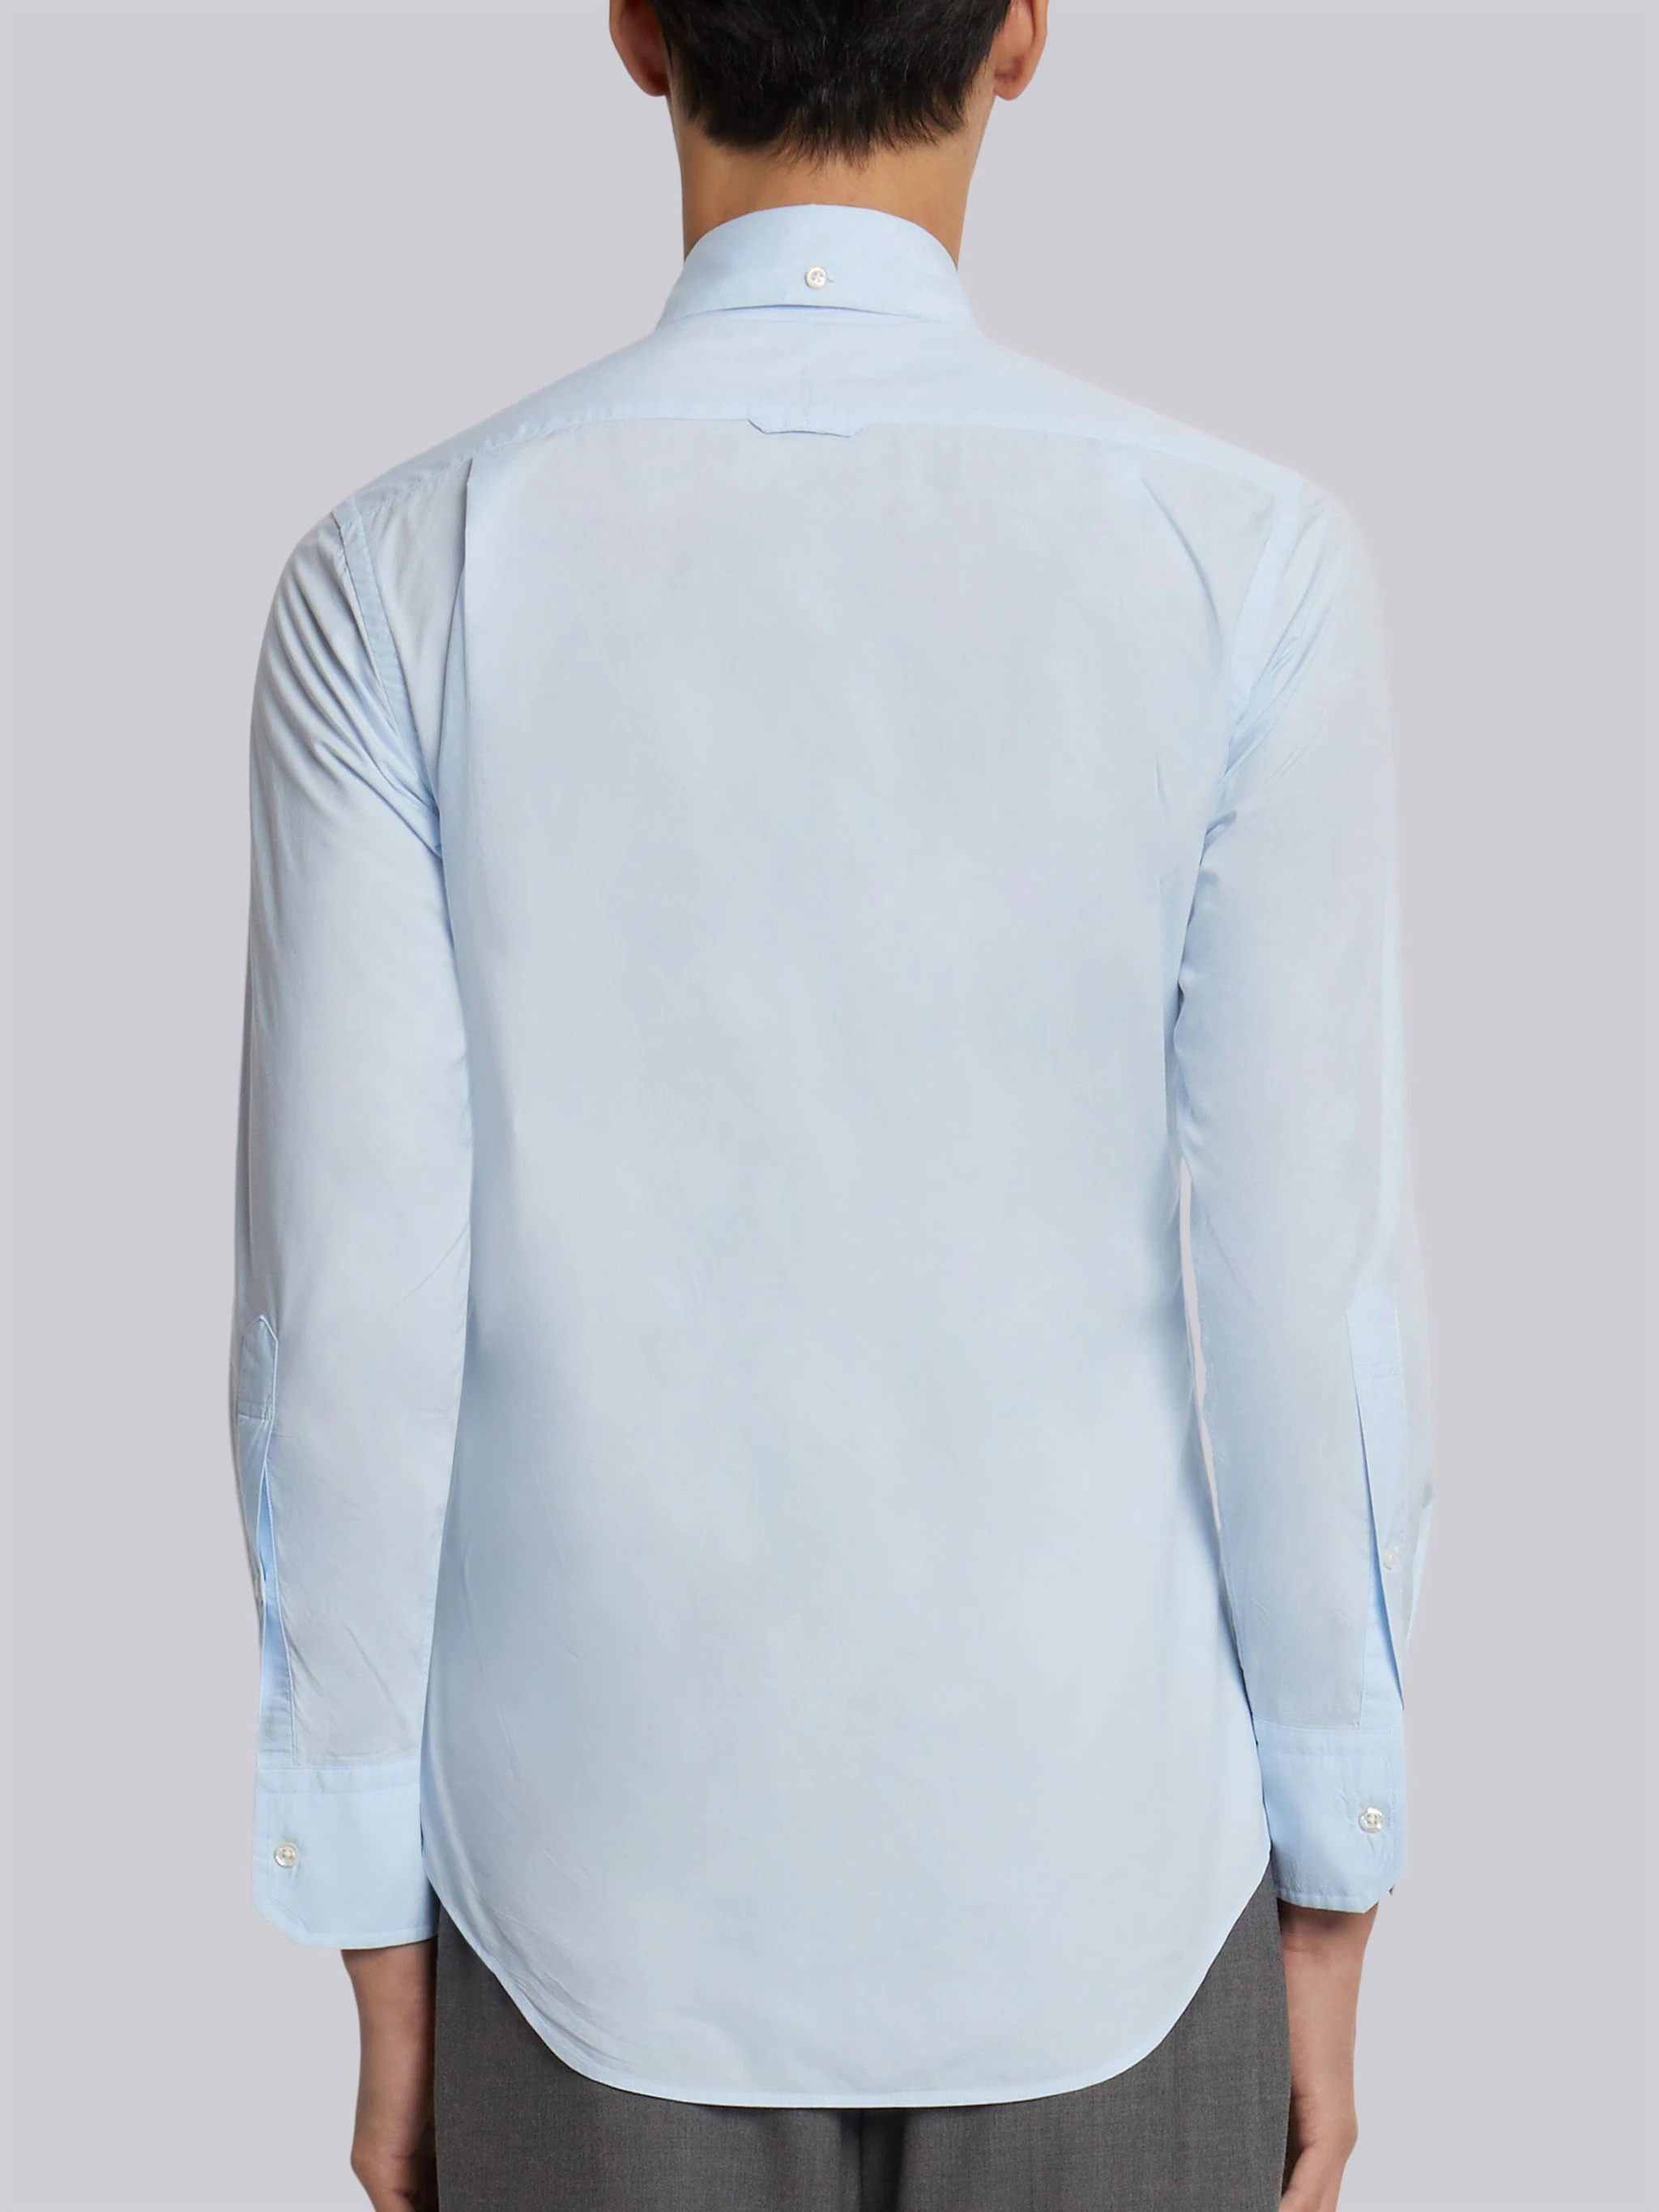 Light Blue Solid Poplin Stripe Grosgrain Placket Classic Fit Shirt - 4